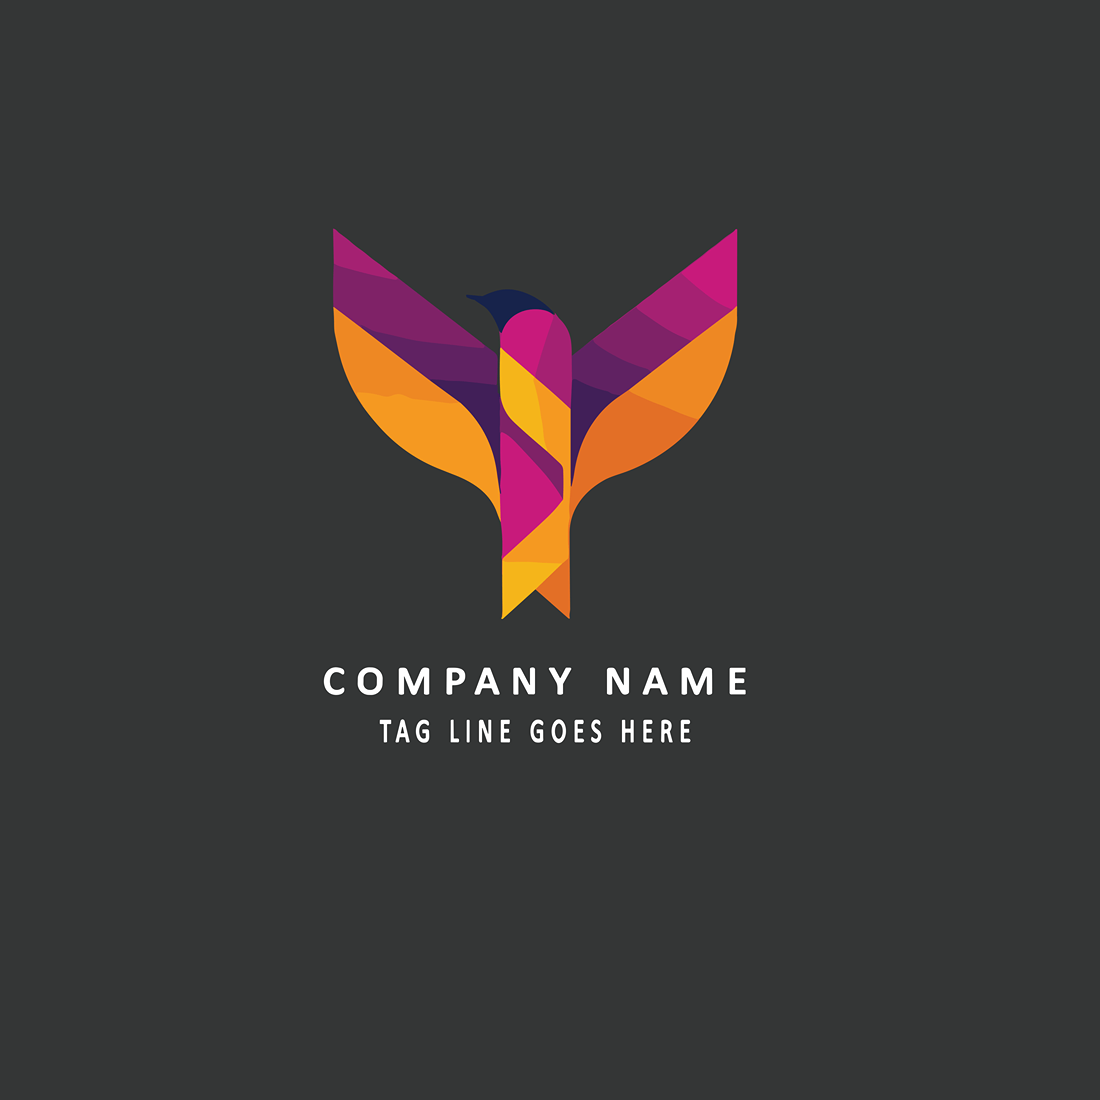 Geometric Bird - Logo Design Template cover image.